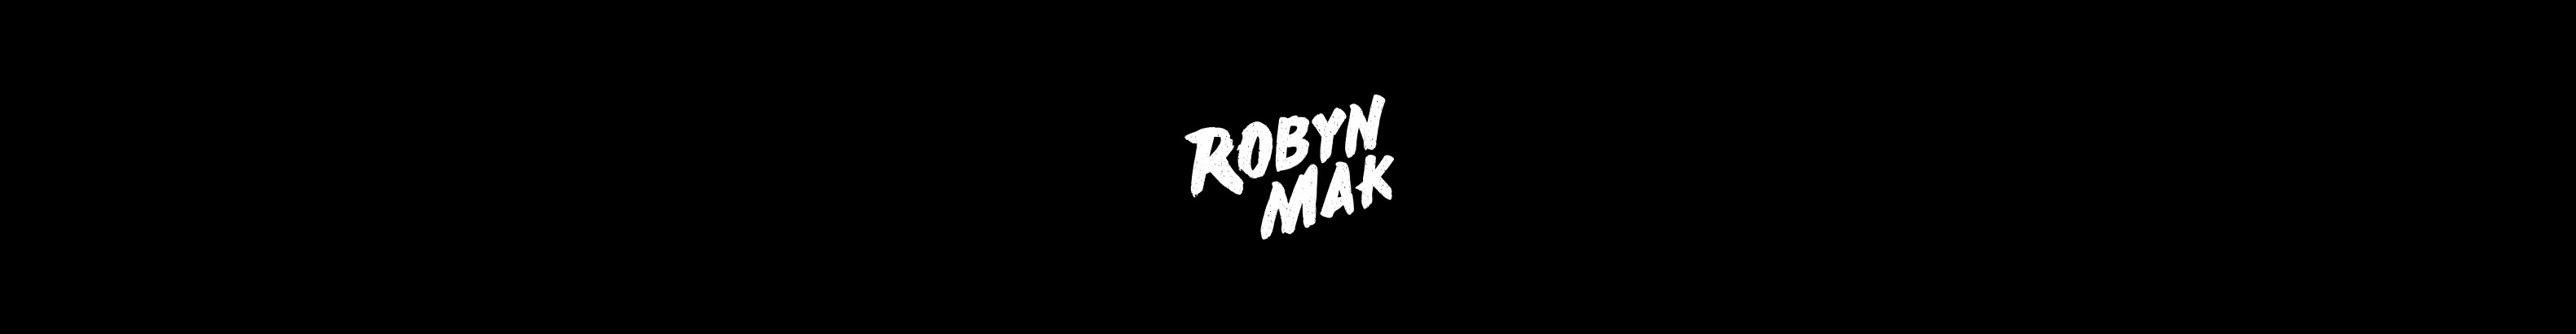 Robyn Makinsons profilbanner